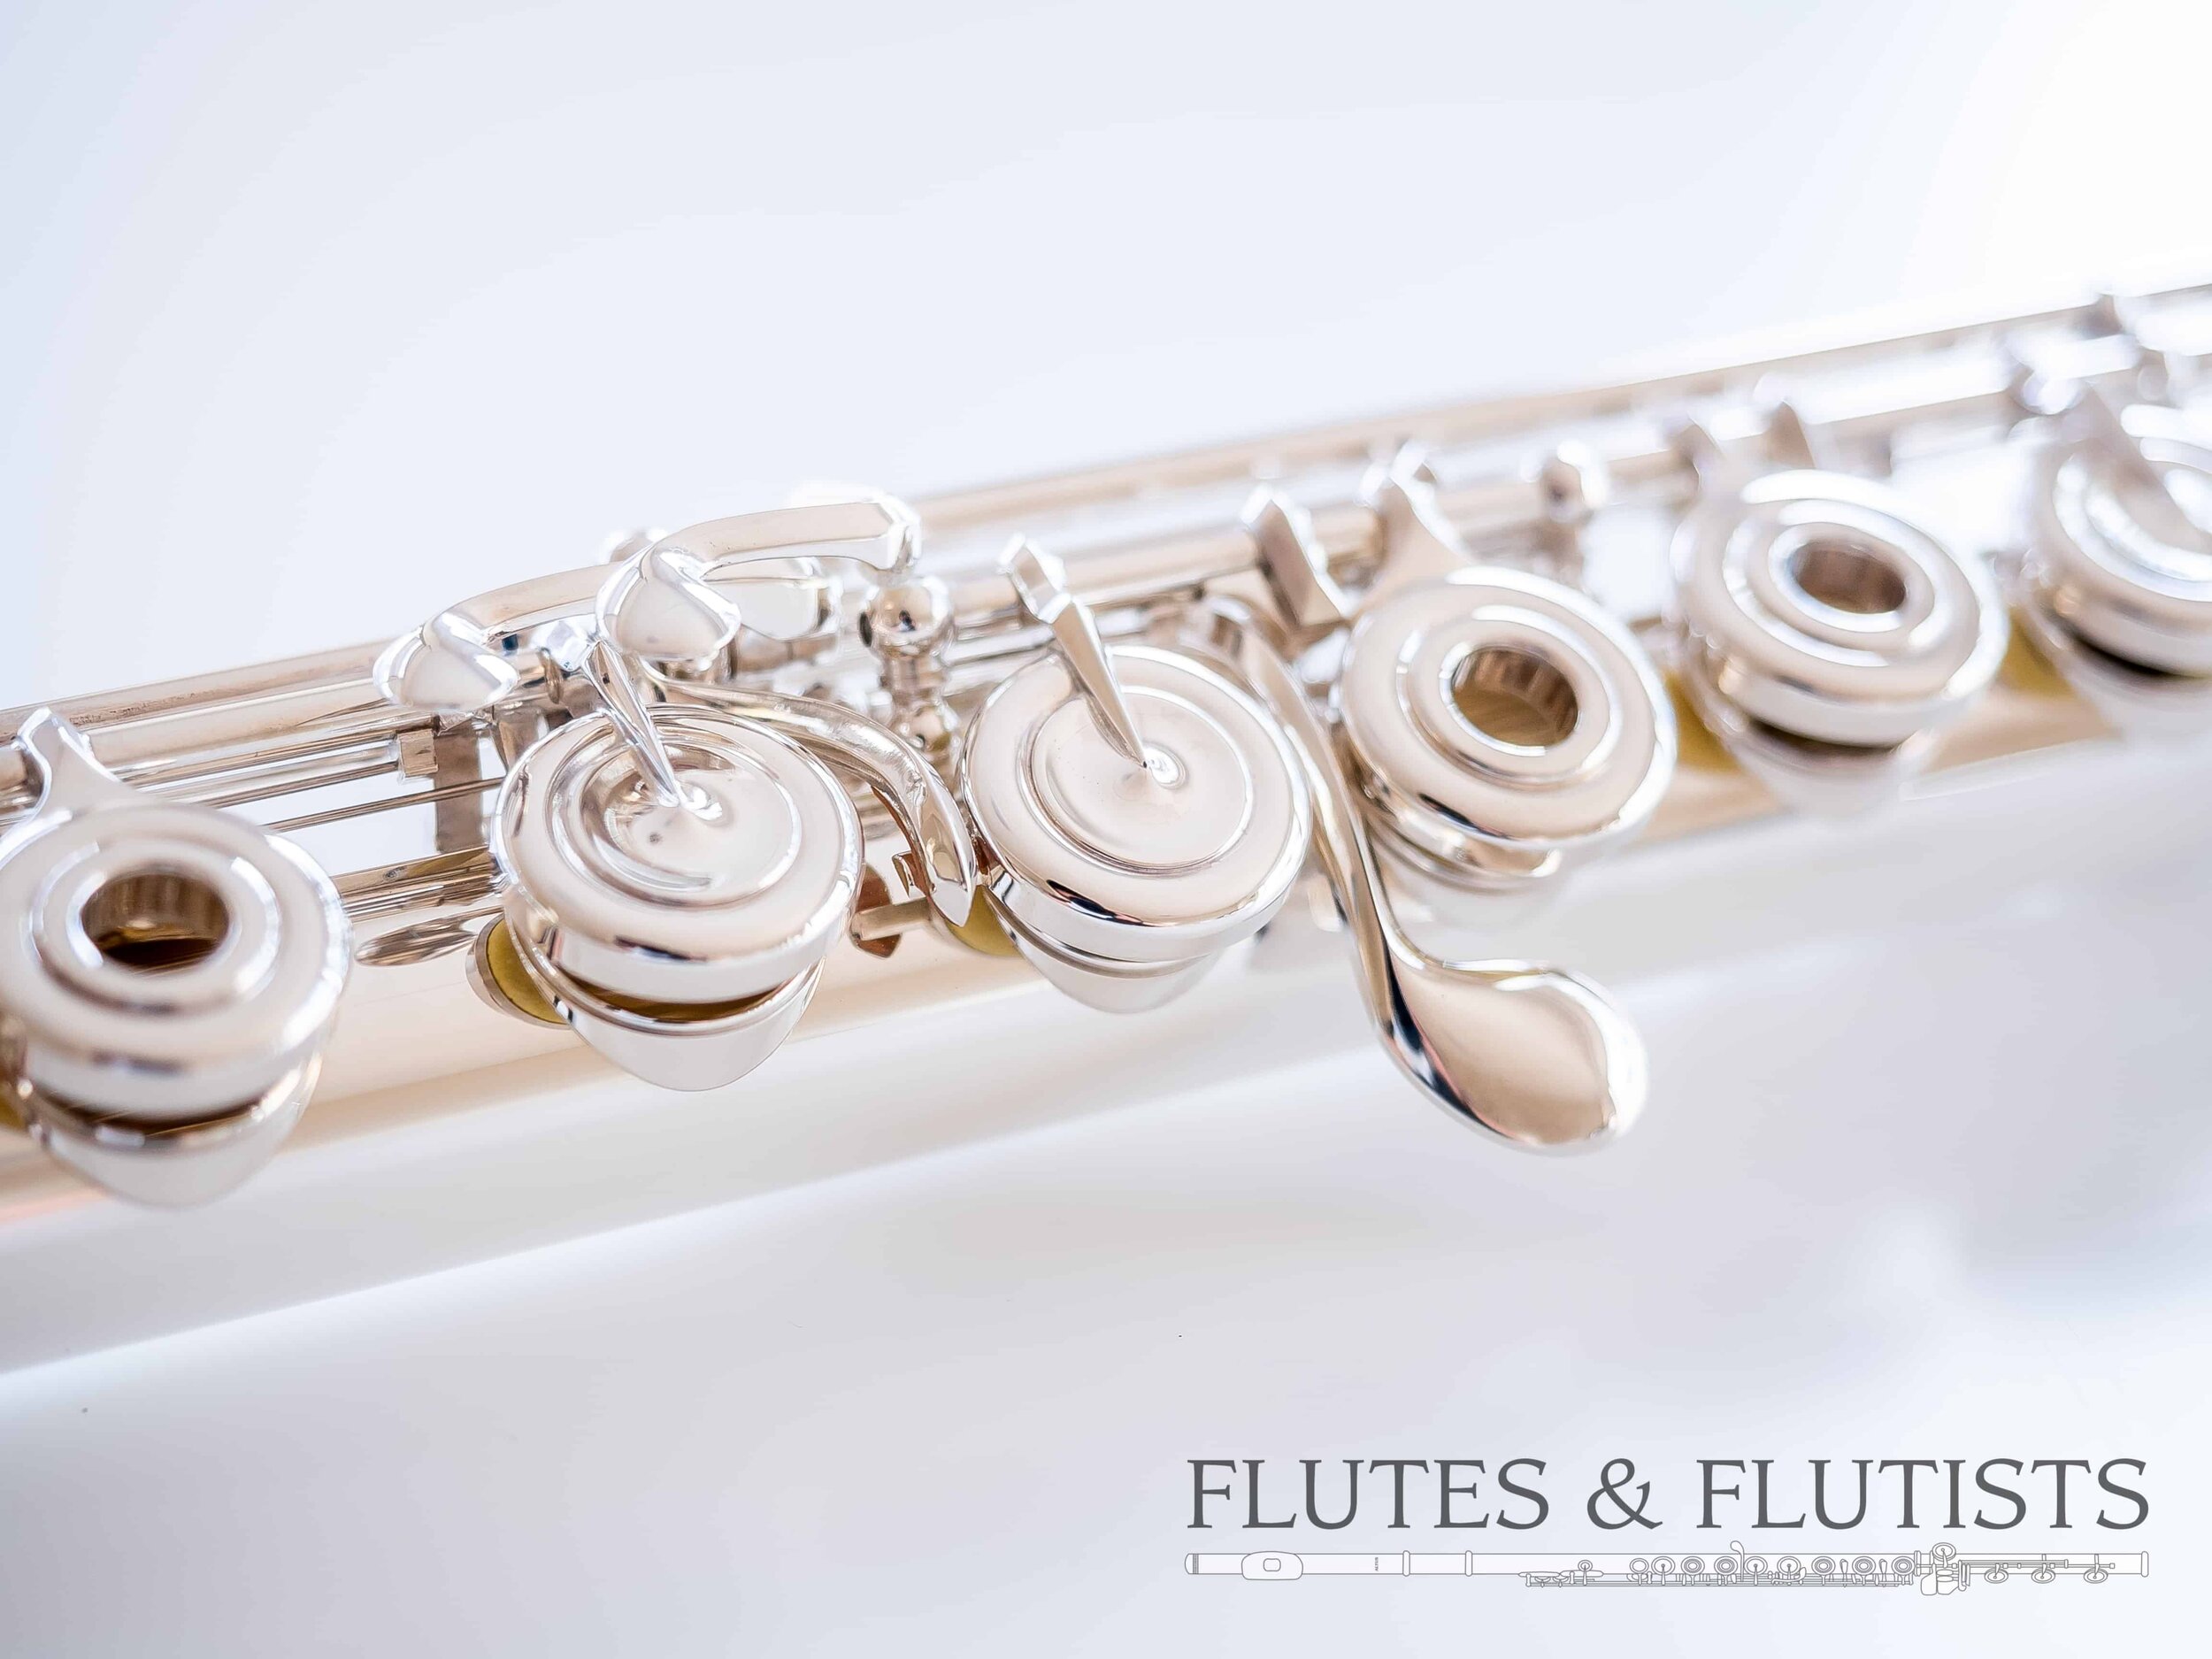 altus flute sales